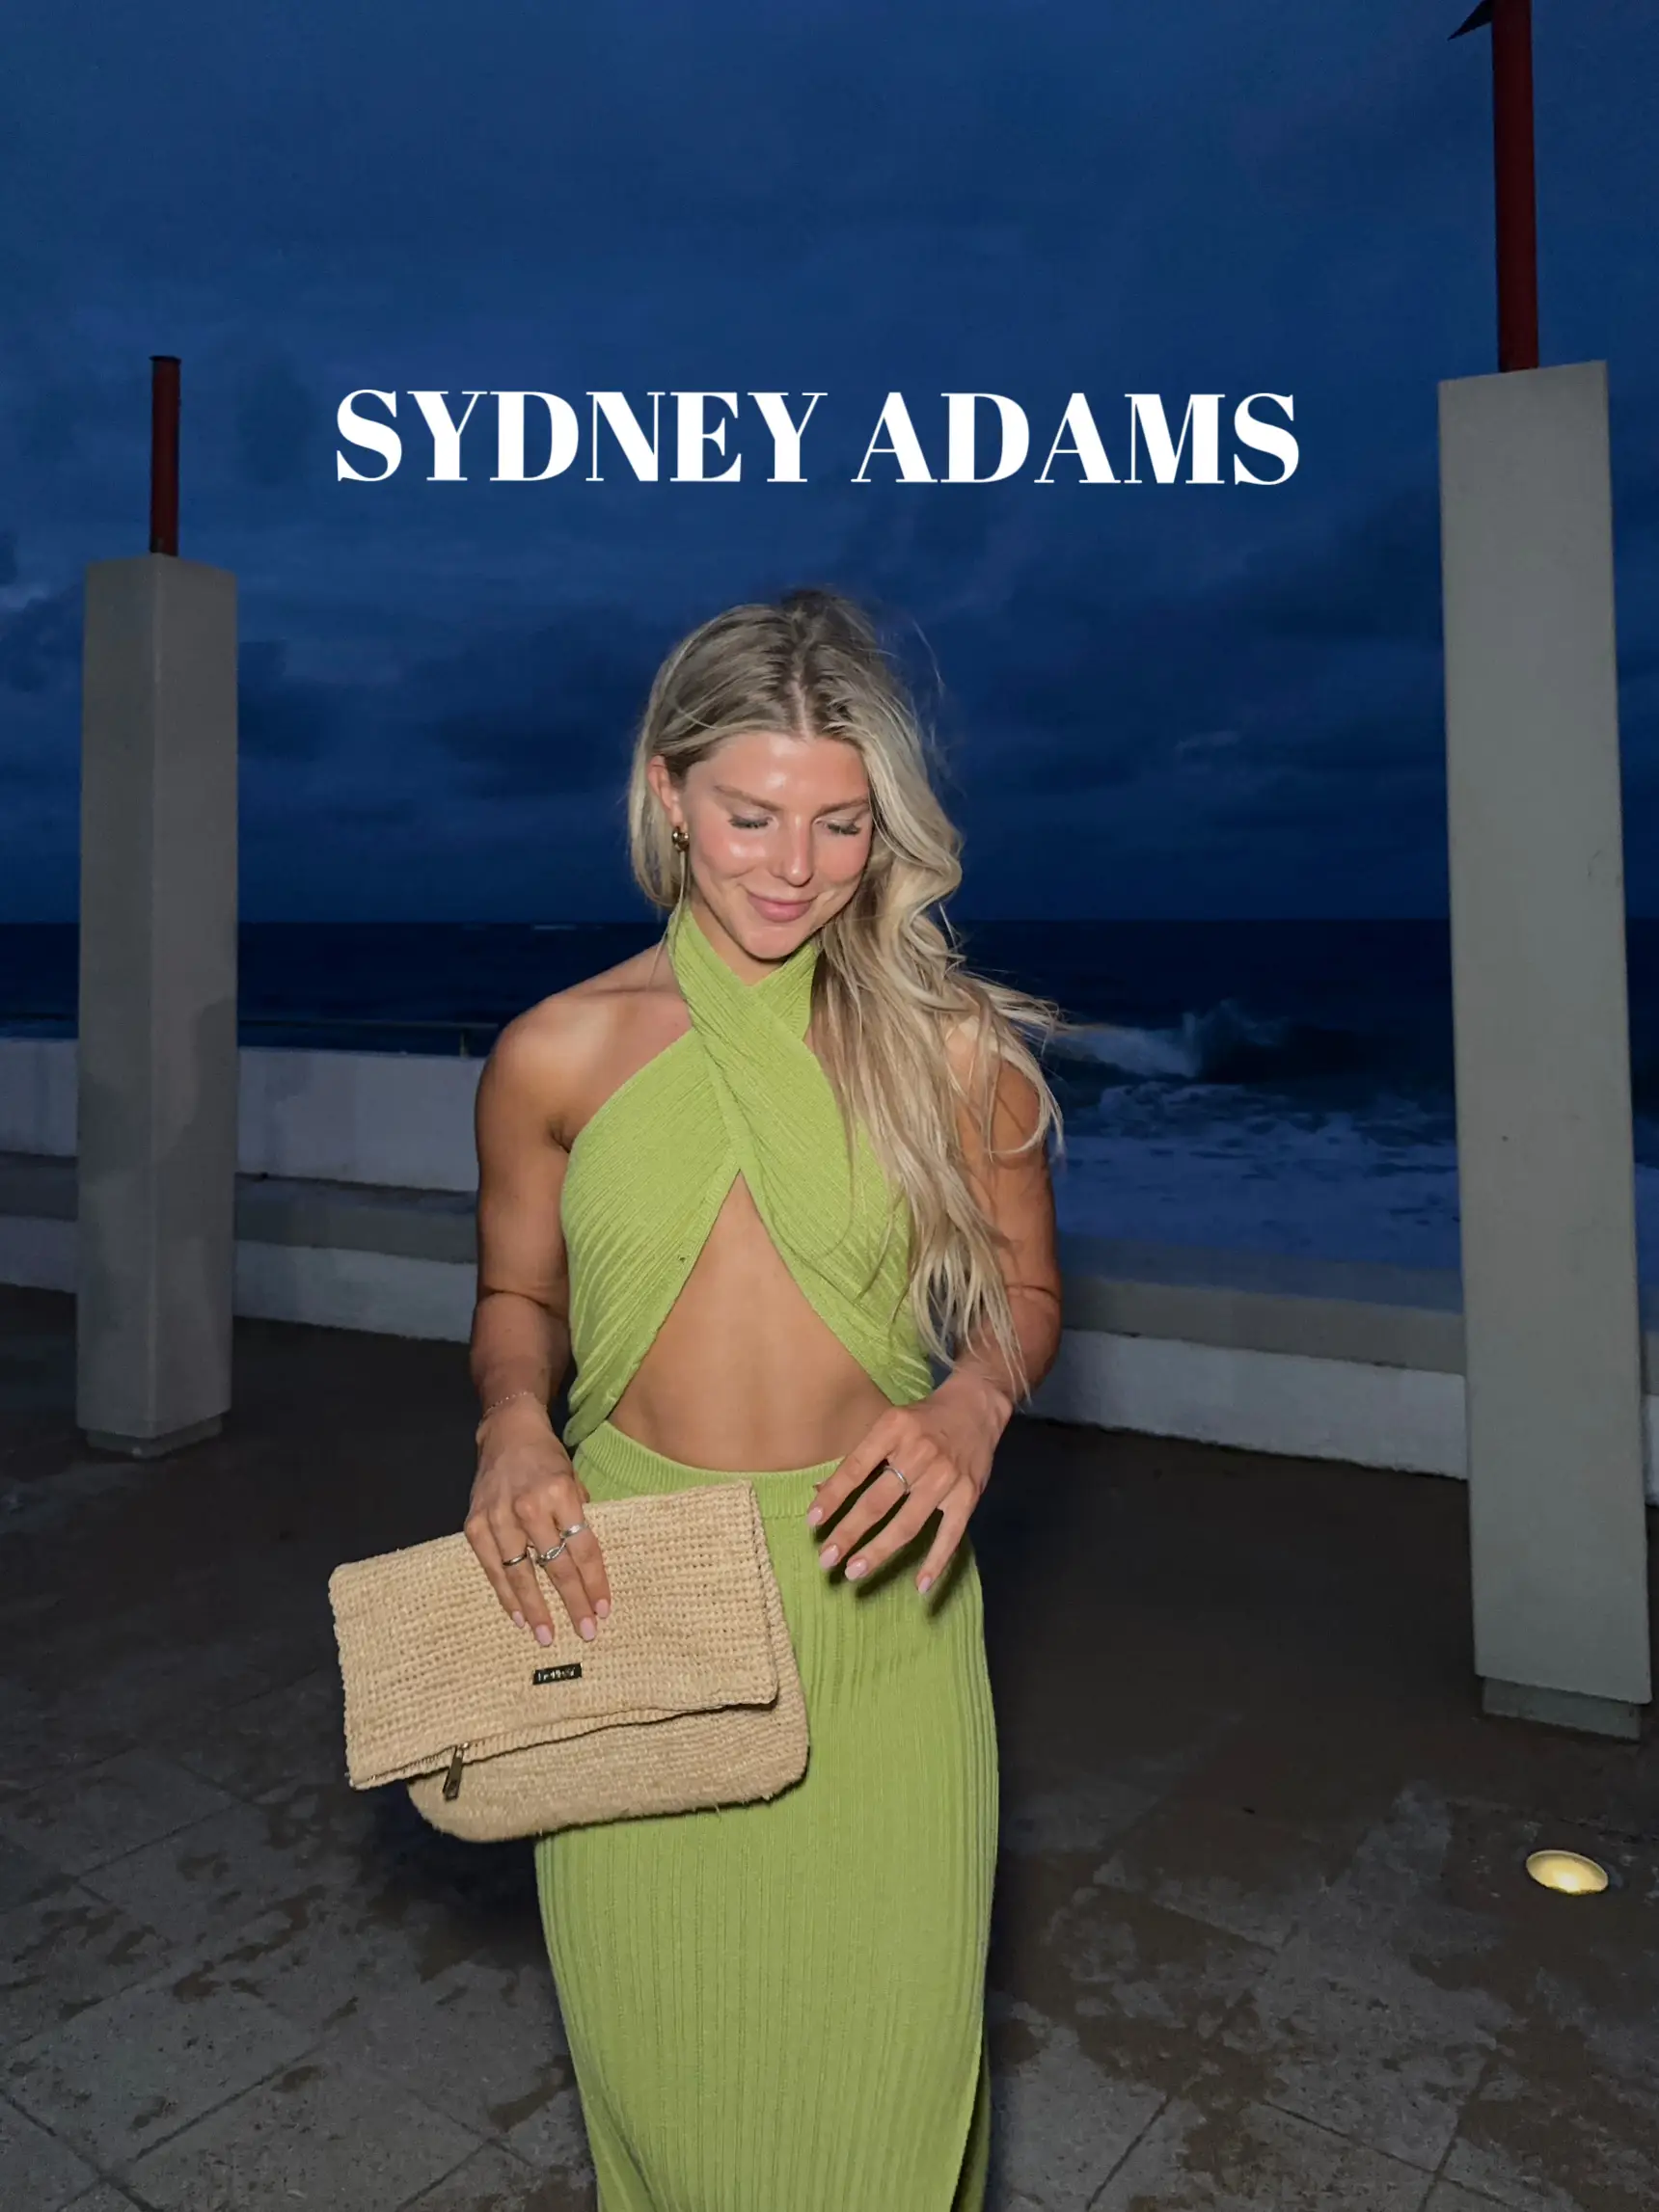 Sydney Adams Homepage - Sydney Adams